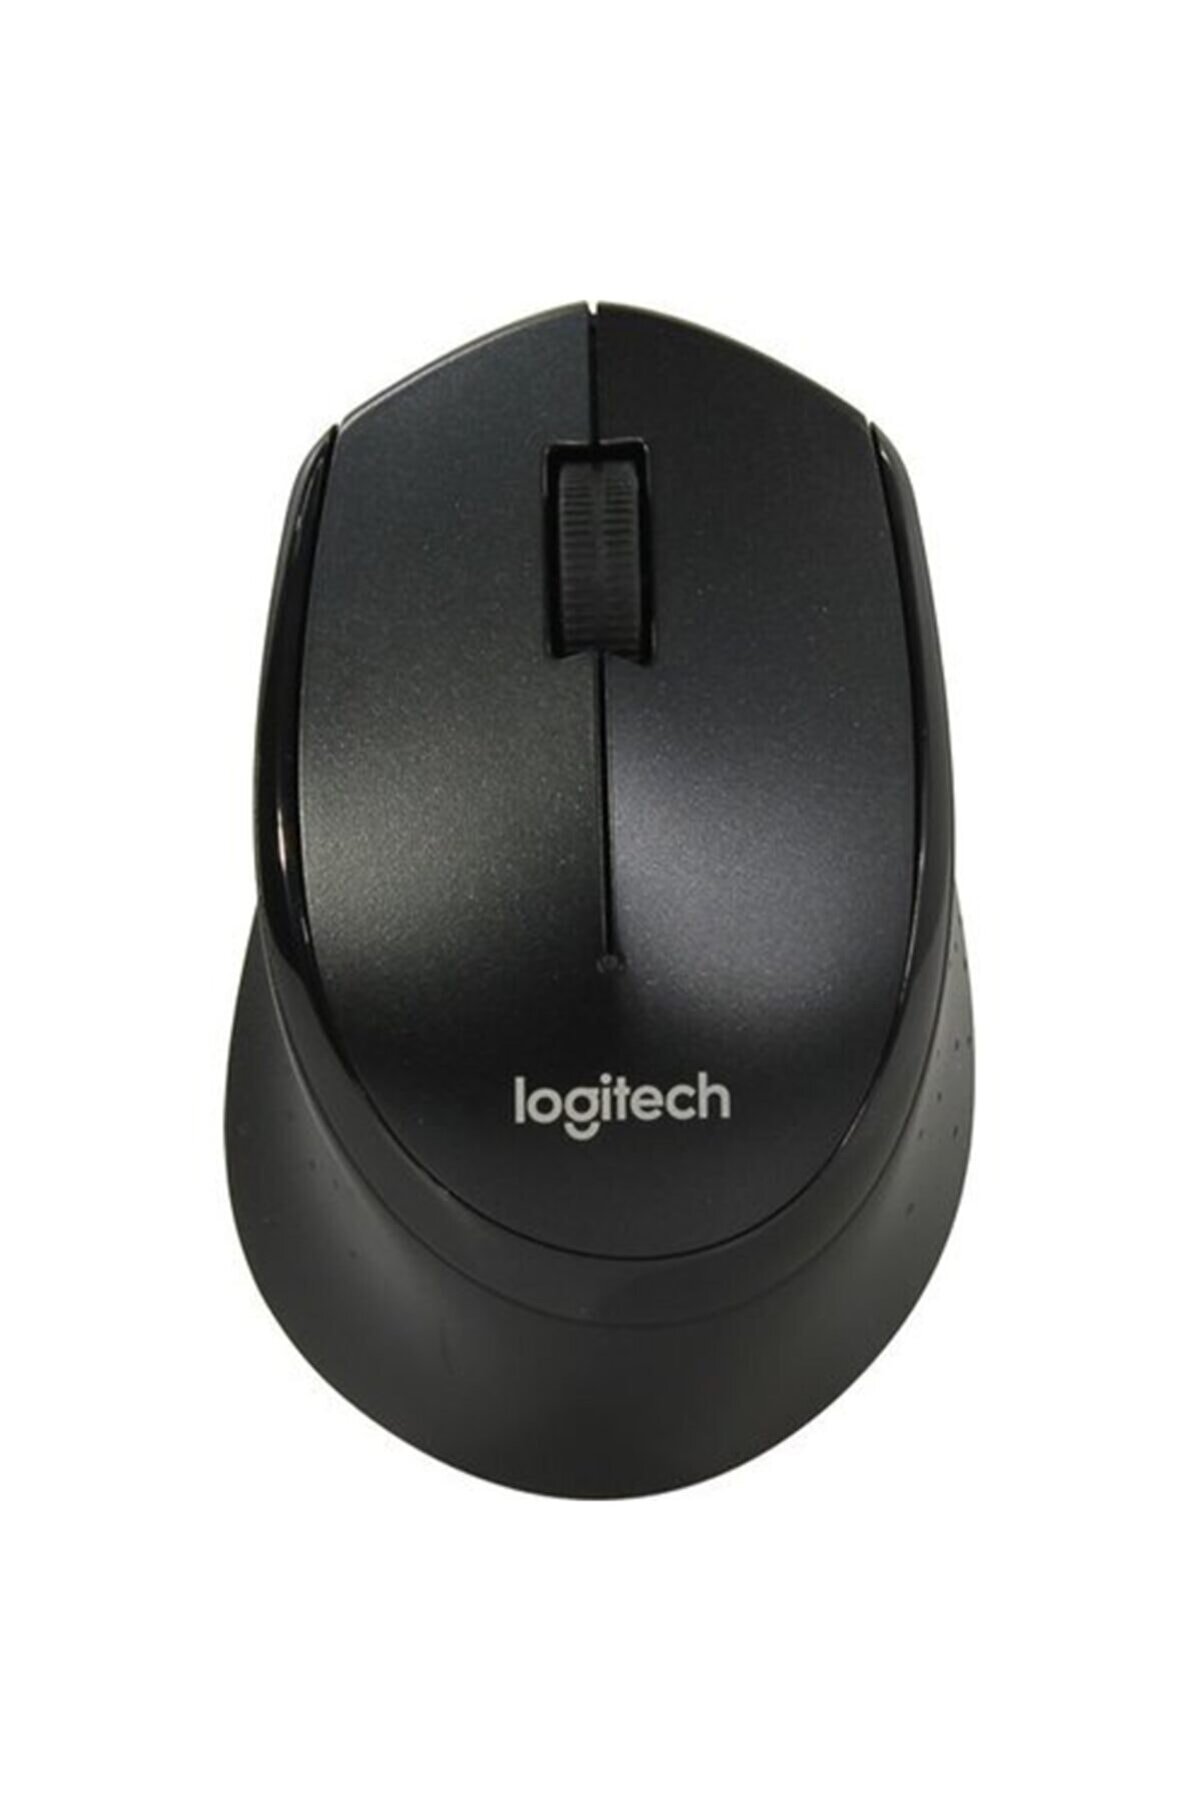 logitech B330 Sessiz Mouse - Siyah 910-004913